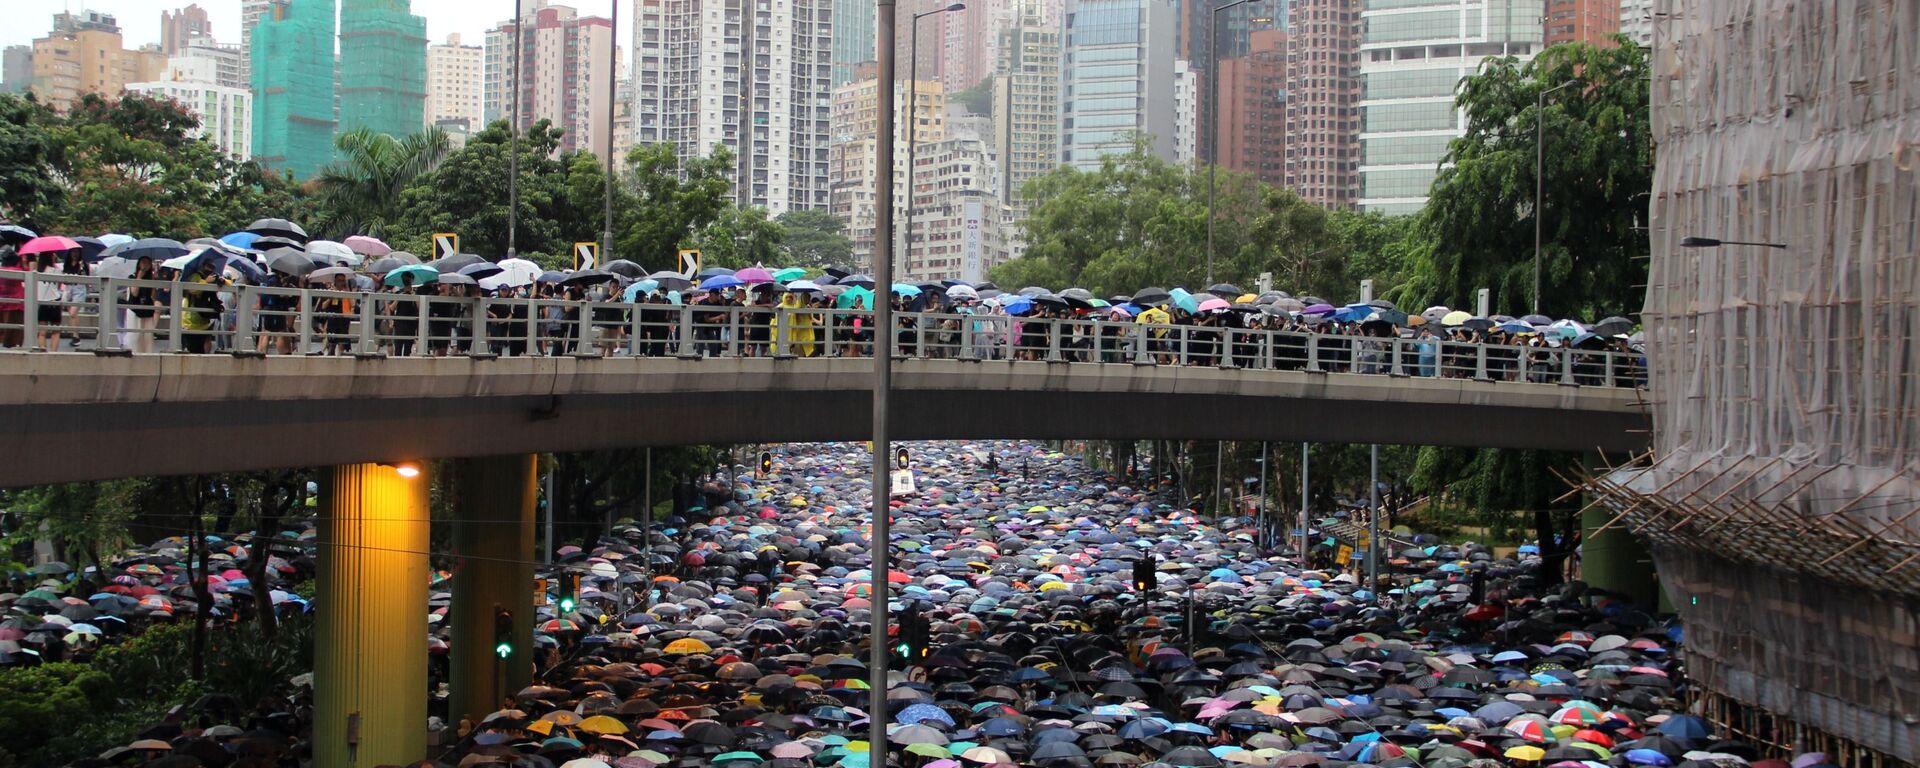 Акция протеста в Гонконге  - Sputnik Latvija, 1920, 22.08.2019